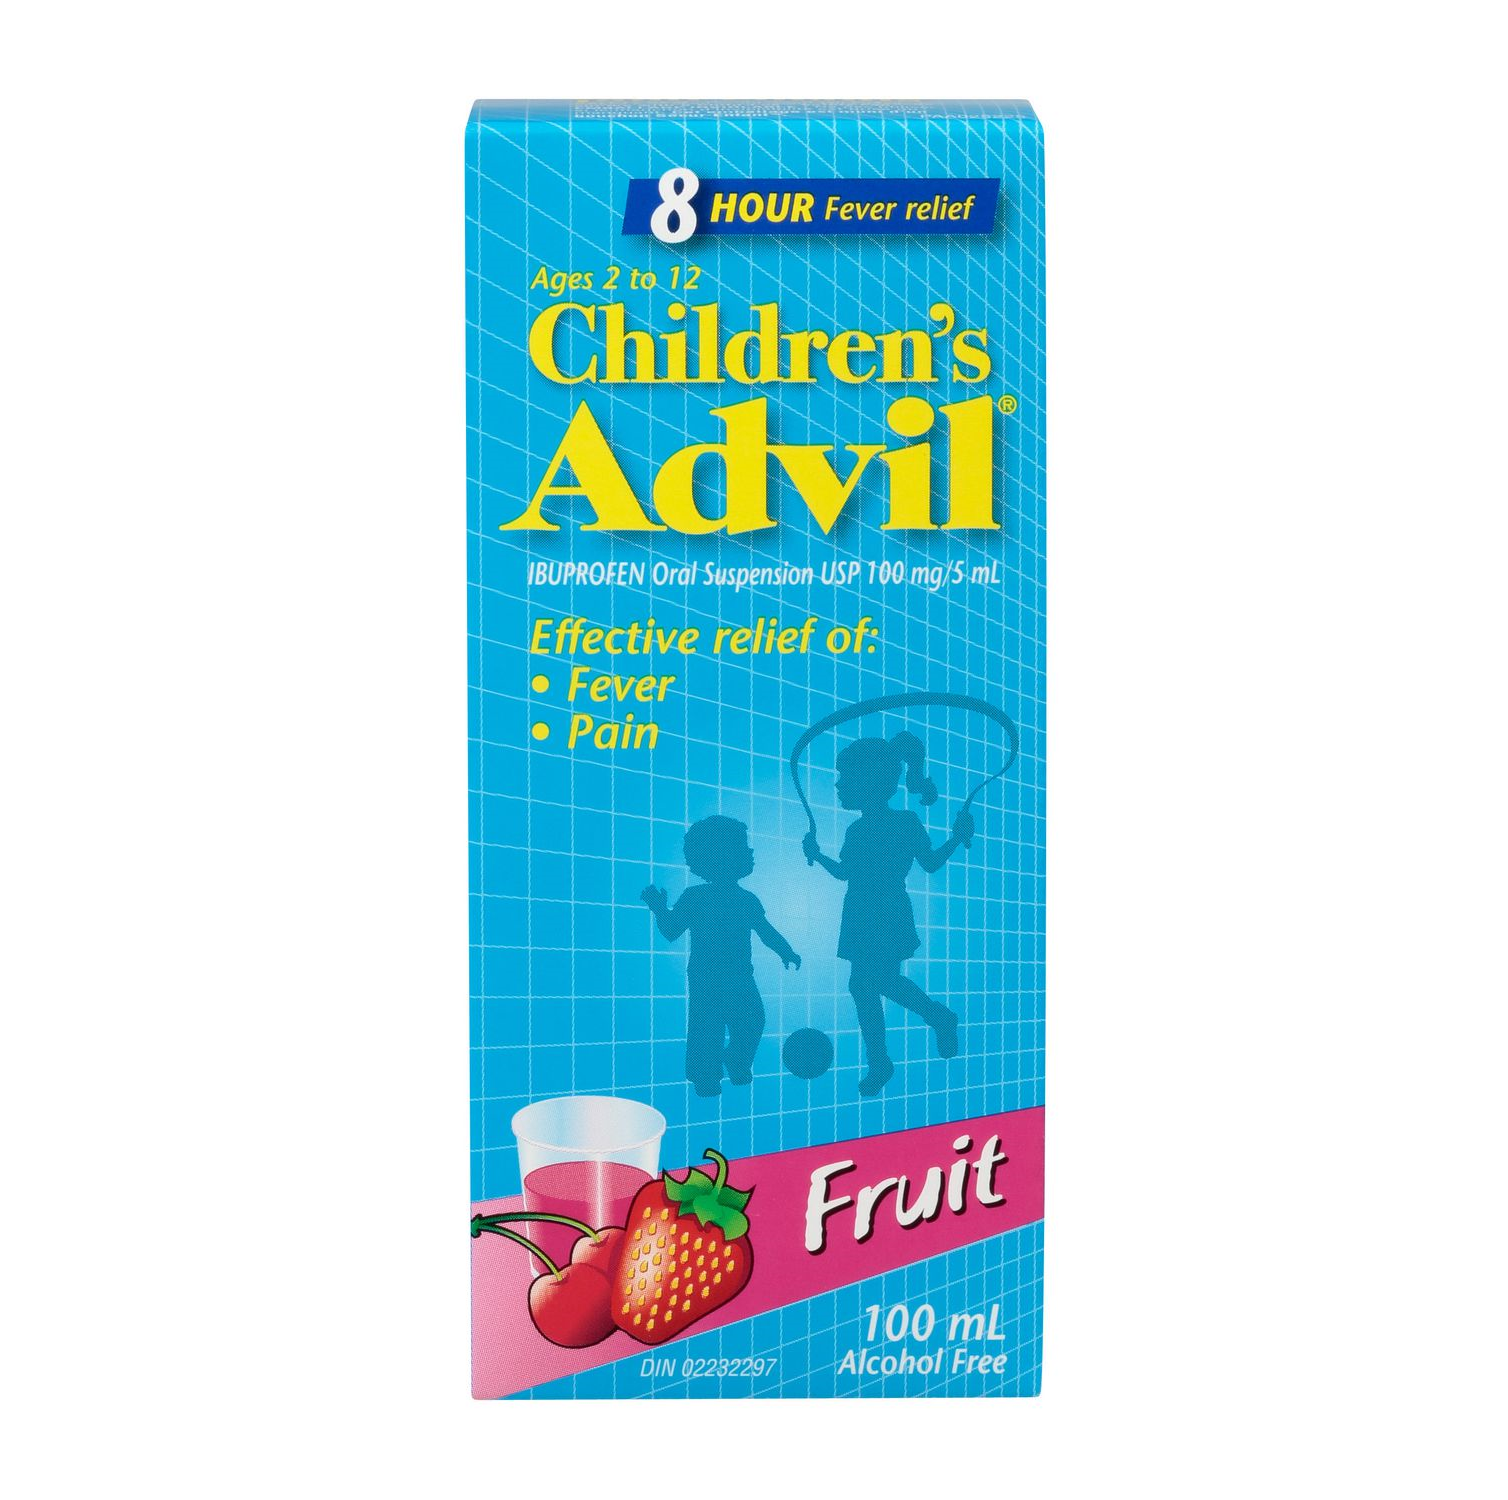 Children's Advil Fruit Flavour 100mL